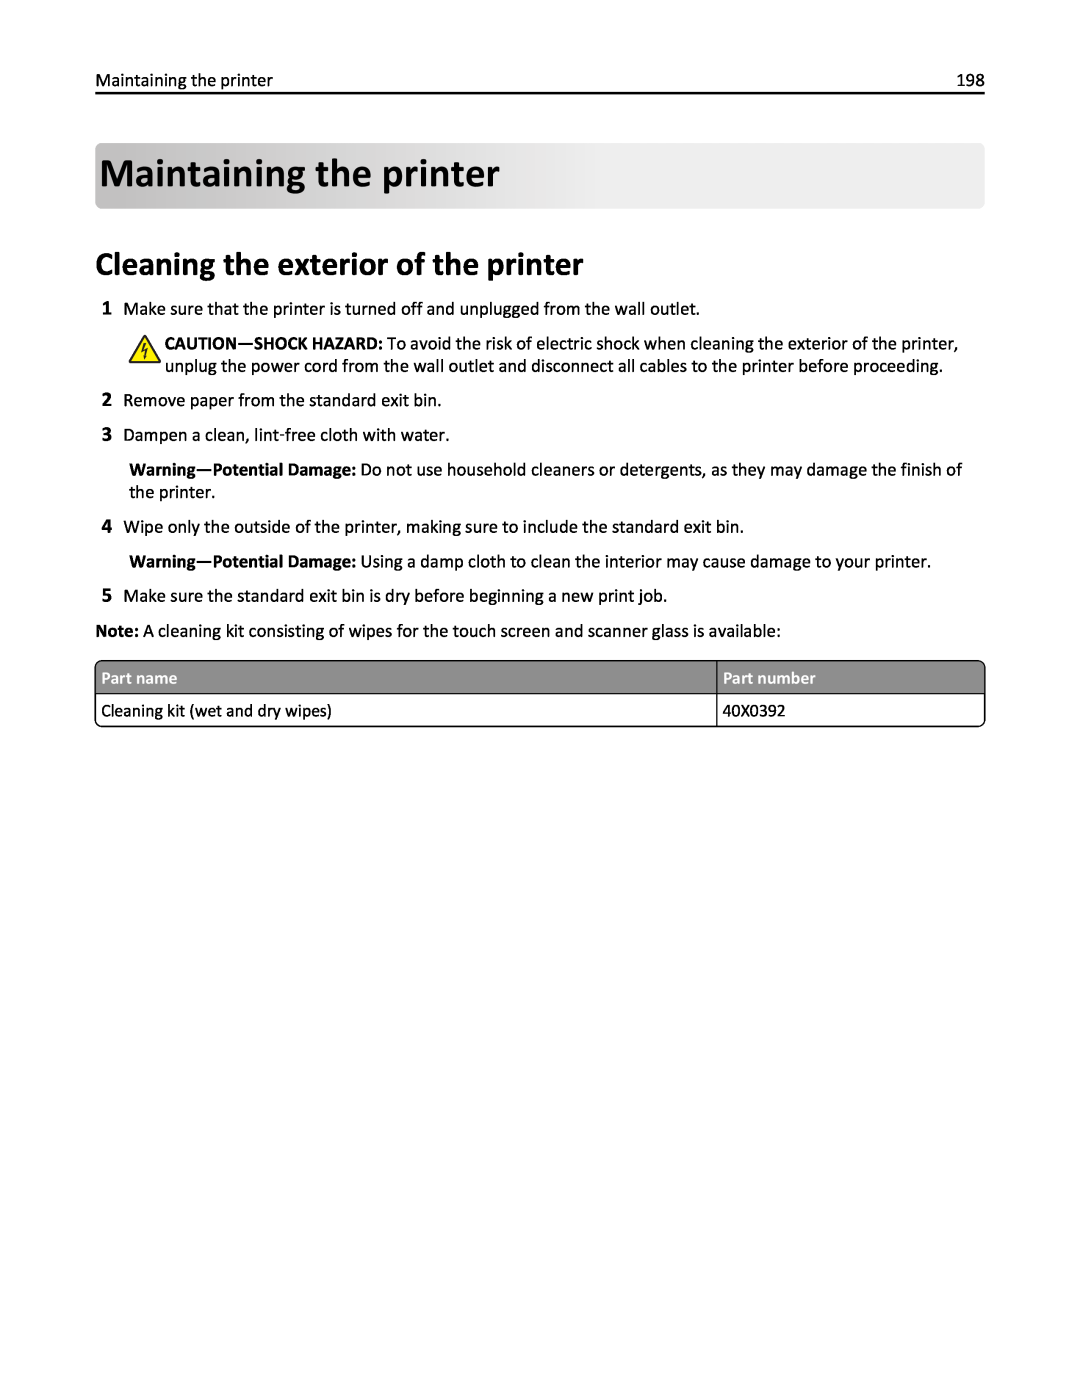 Lexmark 432, 19Z0101, 632, 832, X860DE, X862DE, X864DE, 19Z4028 Maintaining theprinter, Cleaning the exterior of the printer 